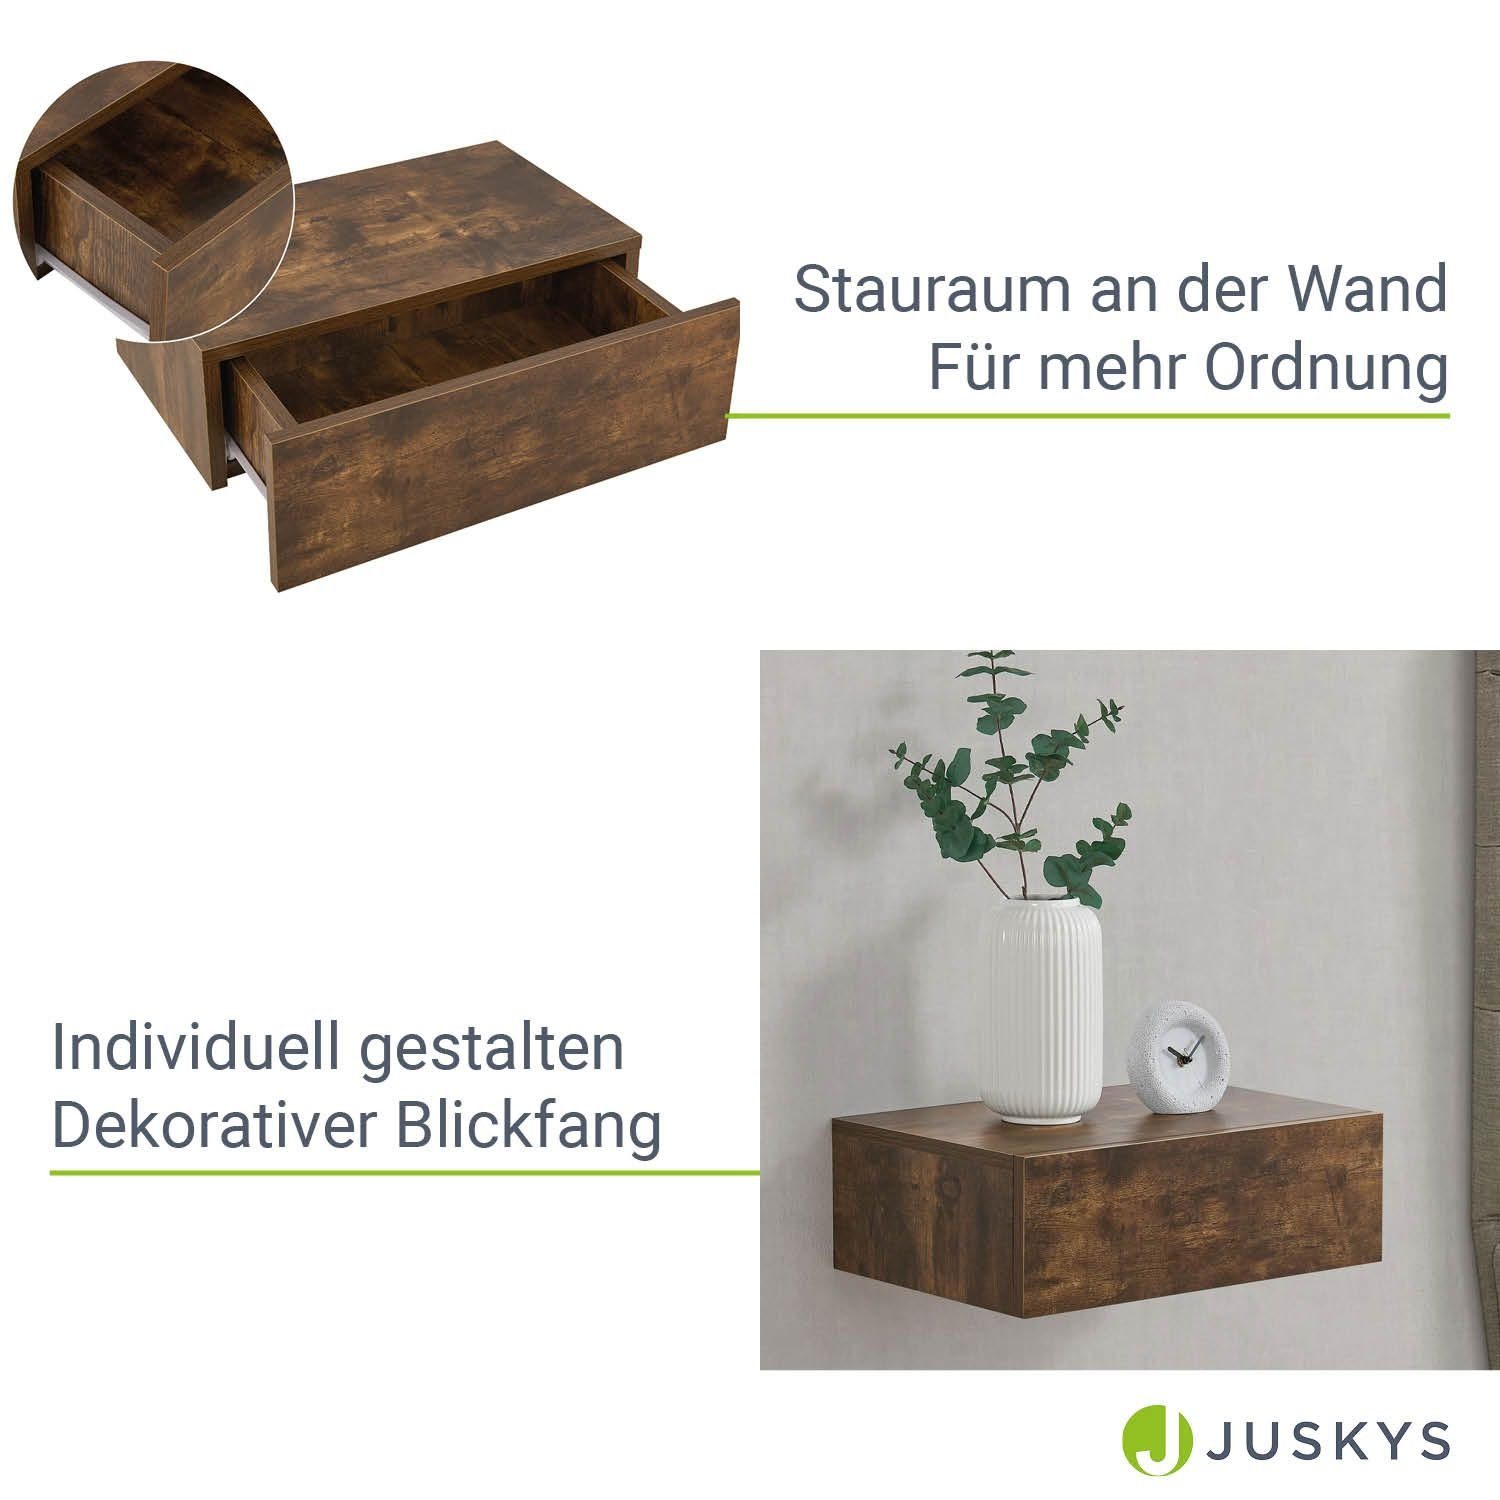 Juskys Wandregal, 1 Schublade pro Befestigungsmaterial Holz, inkl. Natur Regal, Wandmontage, Natur 